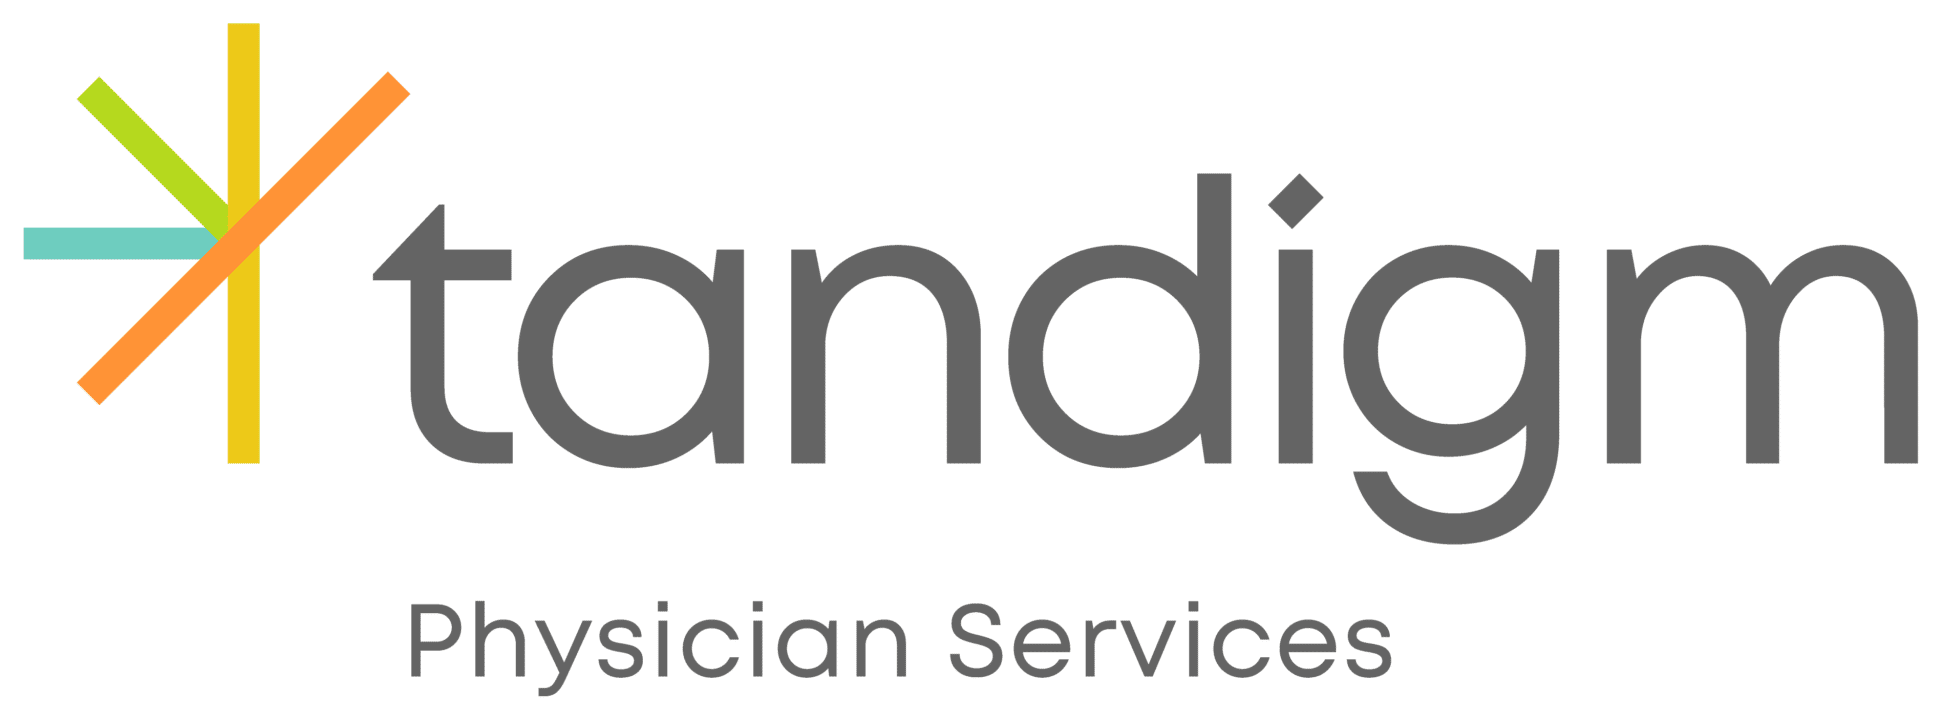 Tandigm Physician Services